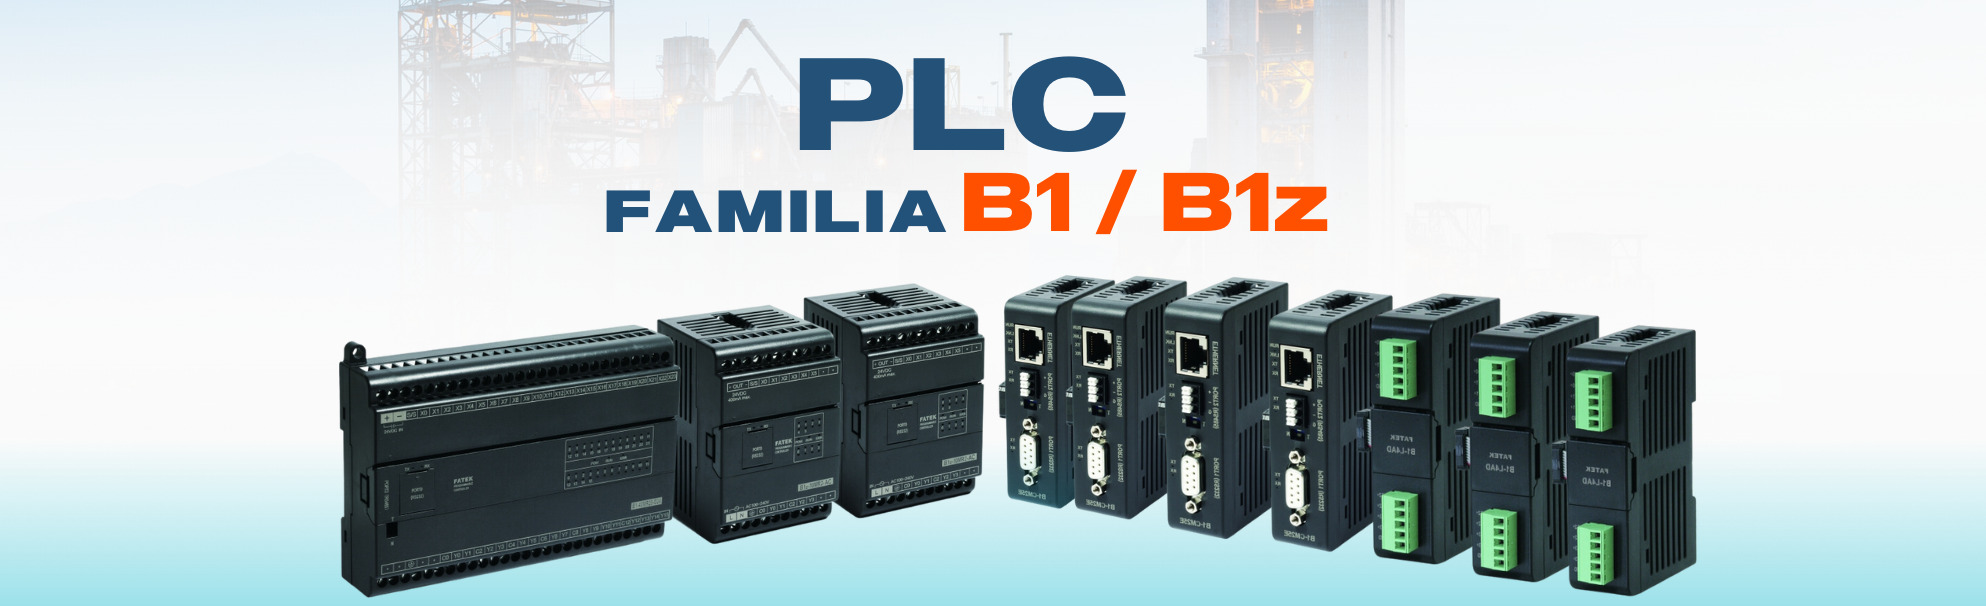 PLC Familia B1 / B1z